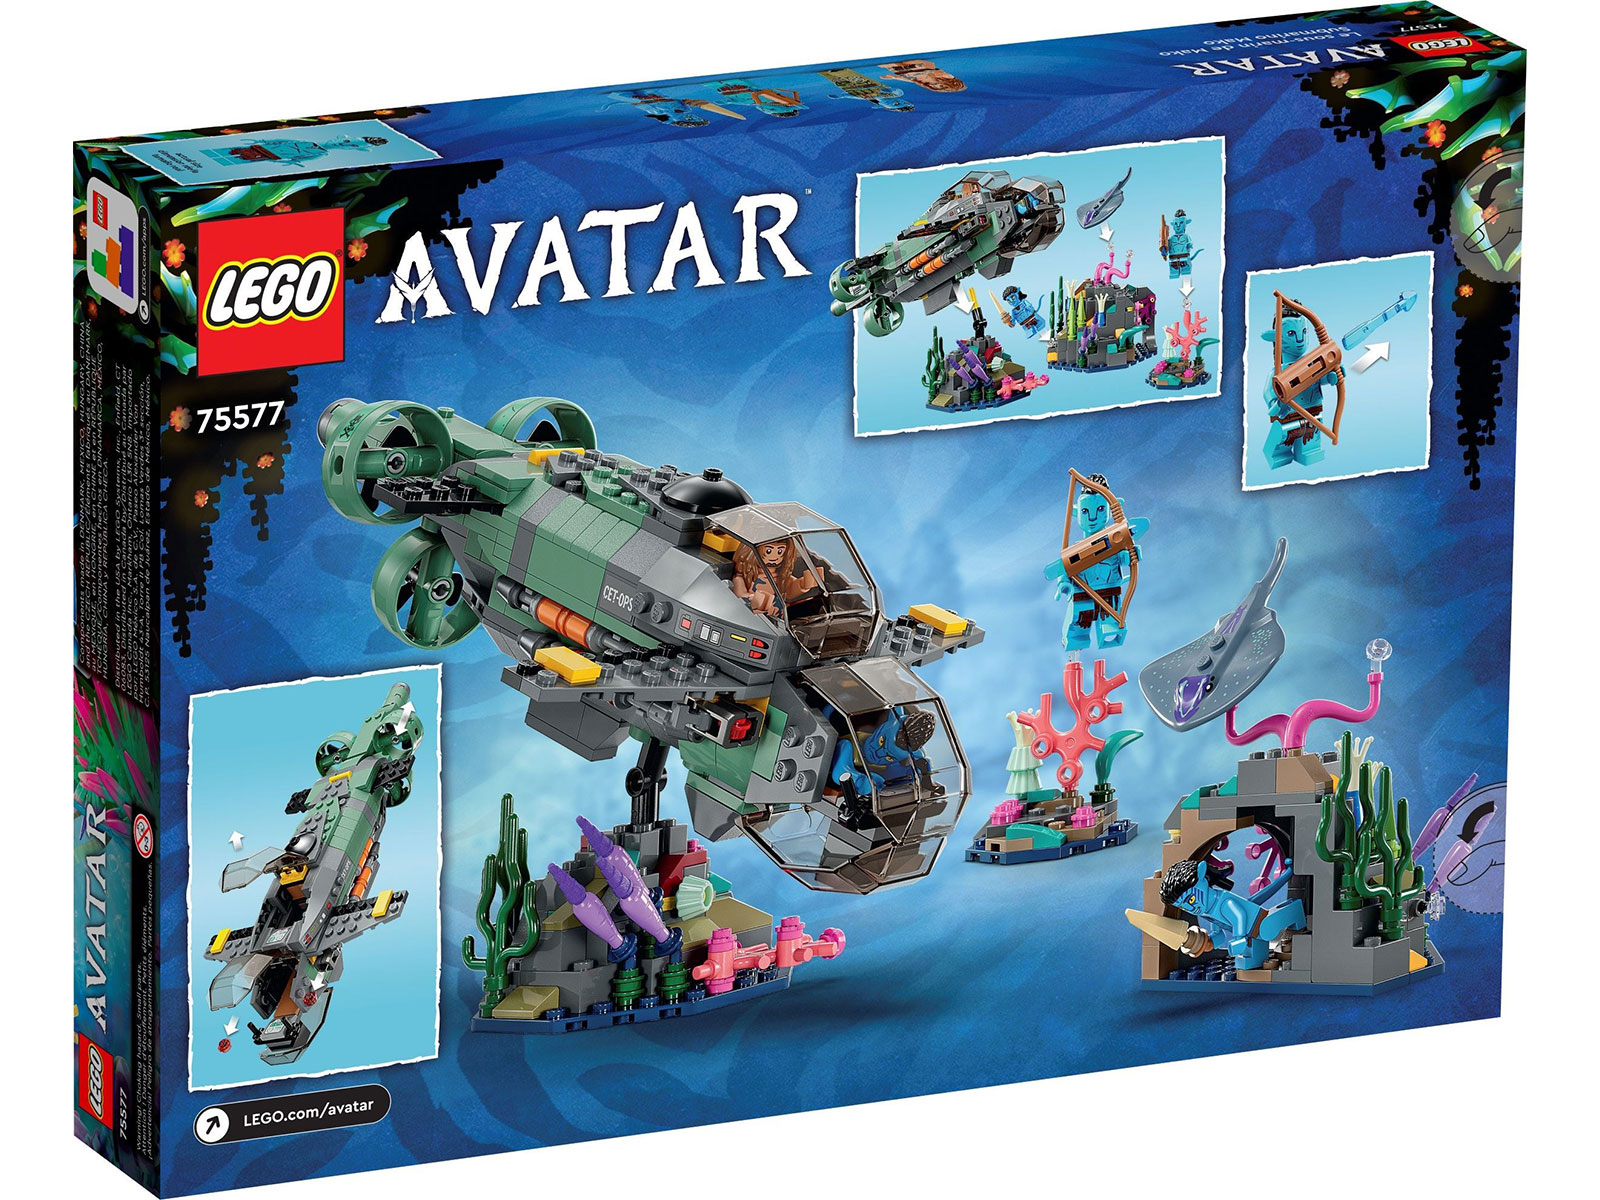 LEGO® Avatar 75577 - Mako U-Boot